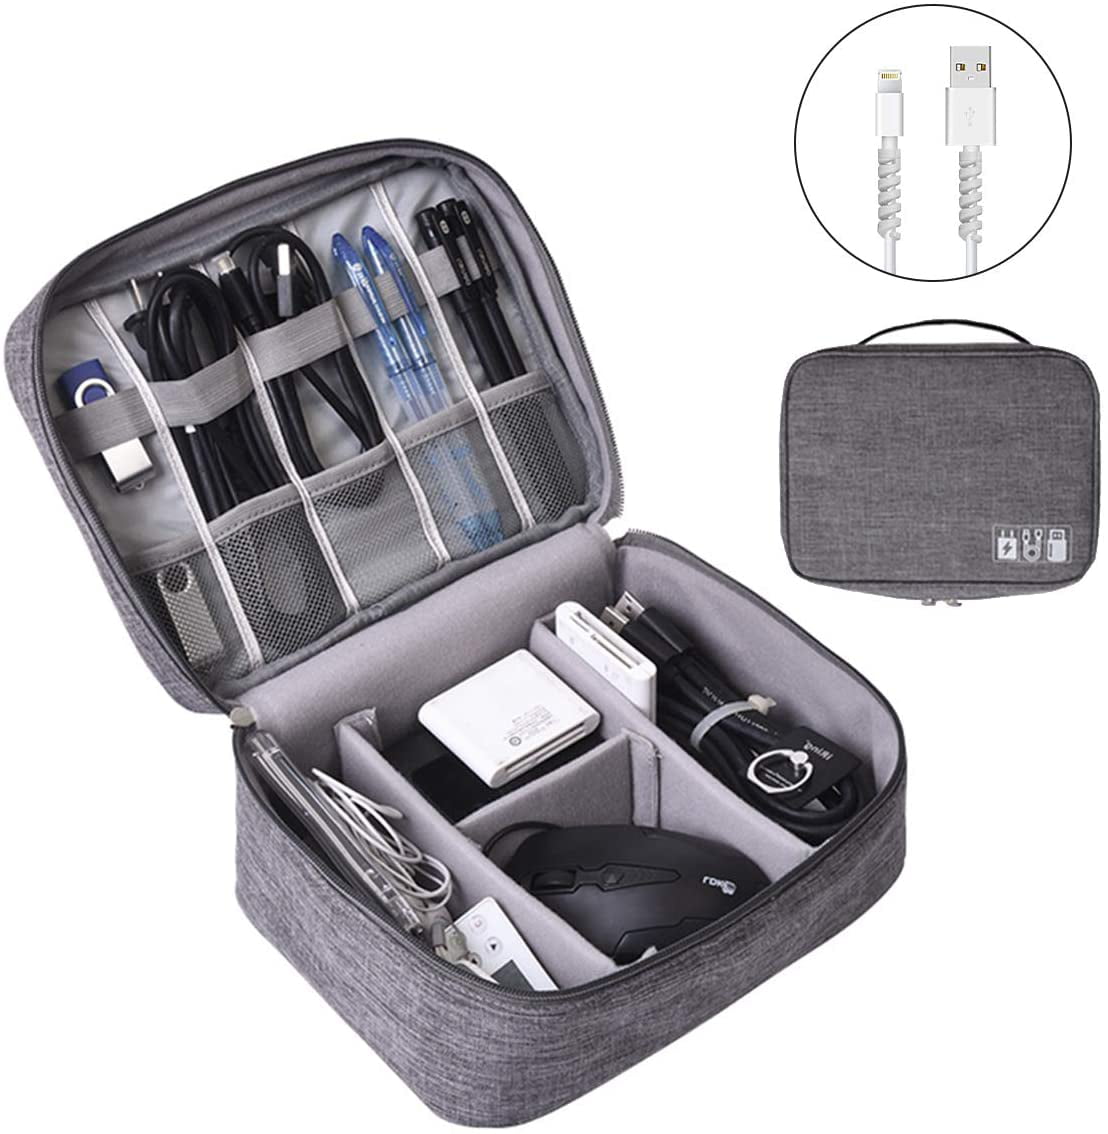 REXSO Electronics Organizer Electronic Accessories Travel Organizer Carrying Portable Bag,Fit Ipad Mini,Kindle,Phone 